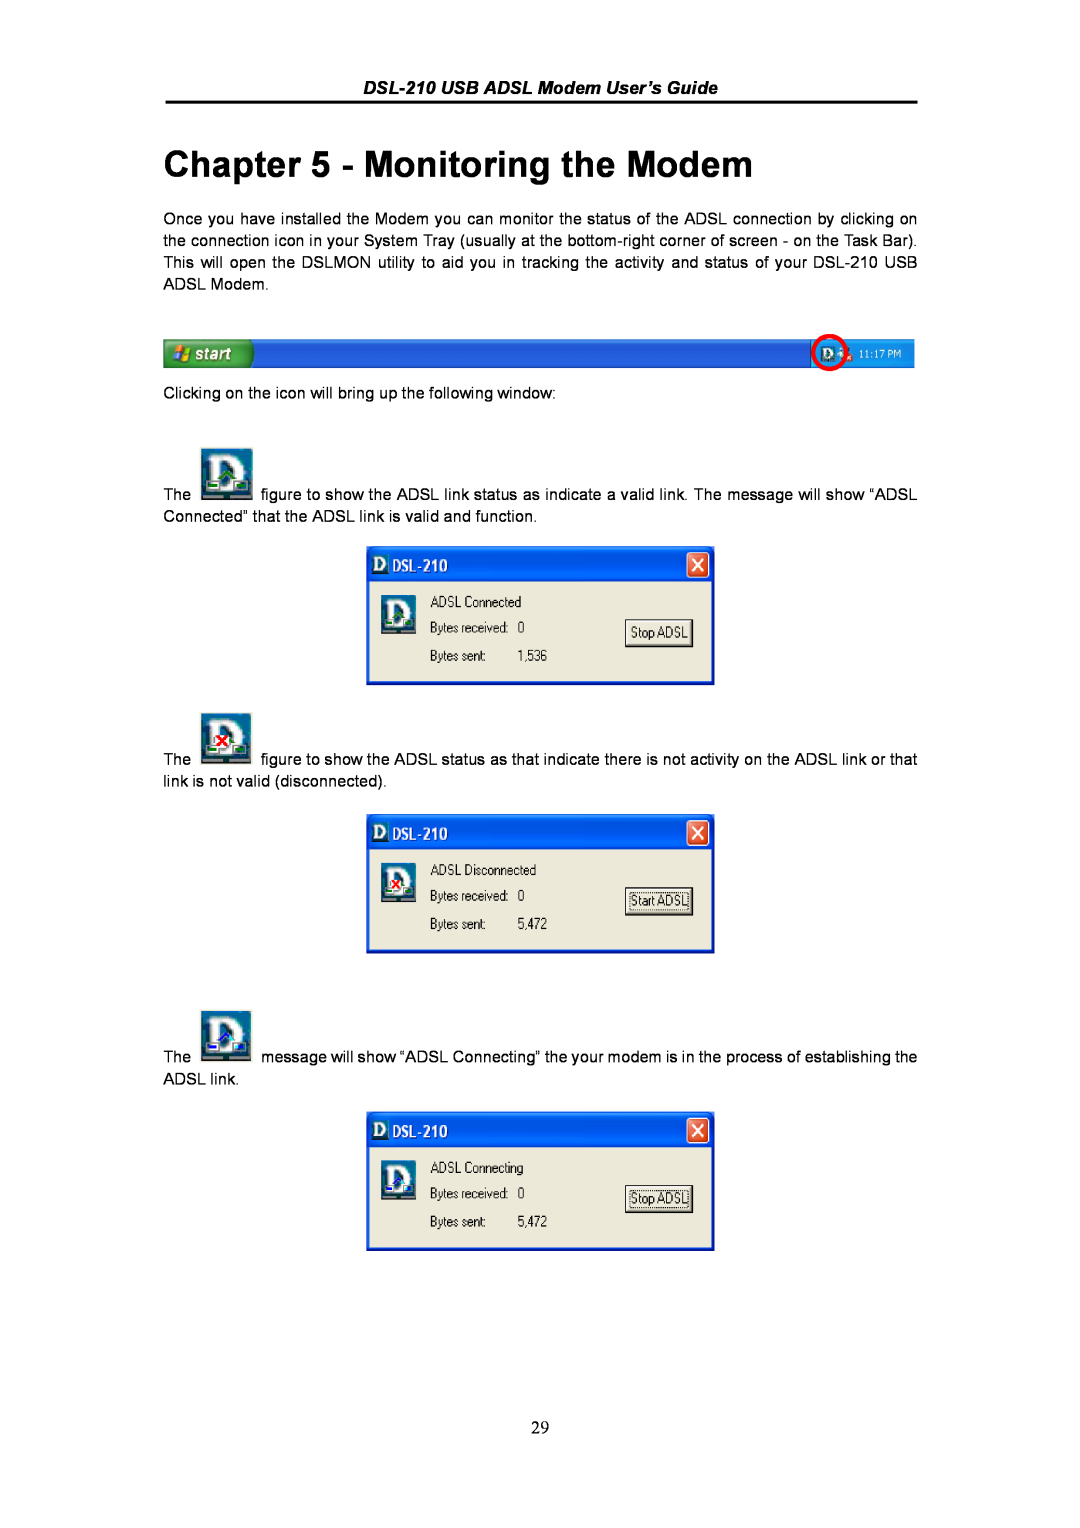 D-Link manual Monitoring the Modem, DSL-210 USB ADSL Modem User’s Guide 